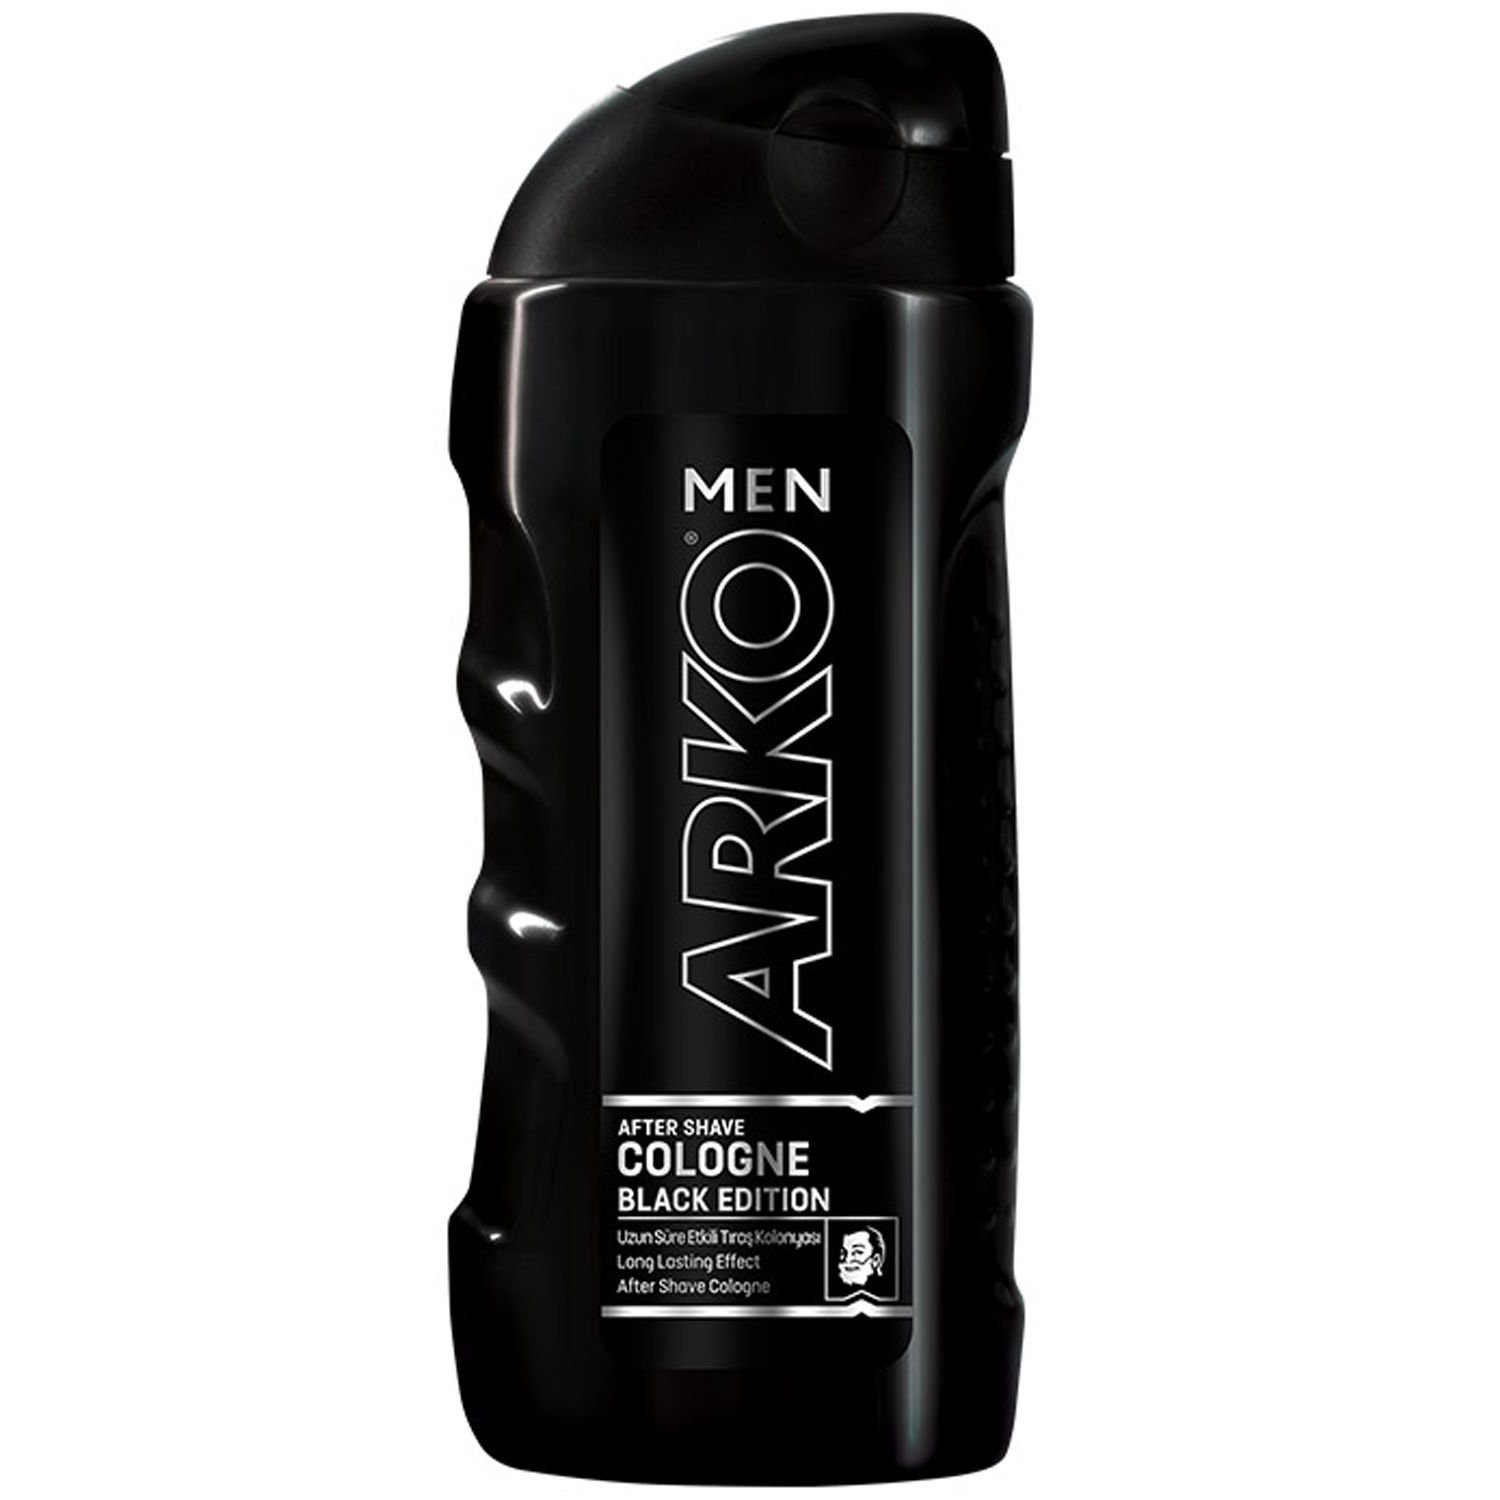 Arko Men Black Edition Tıraş Kolonyası 200 ml